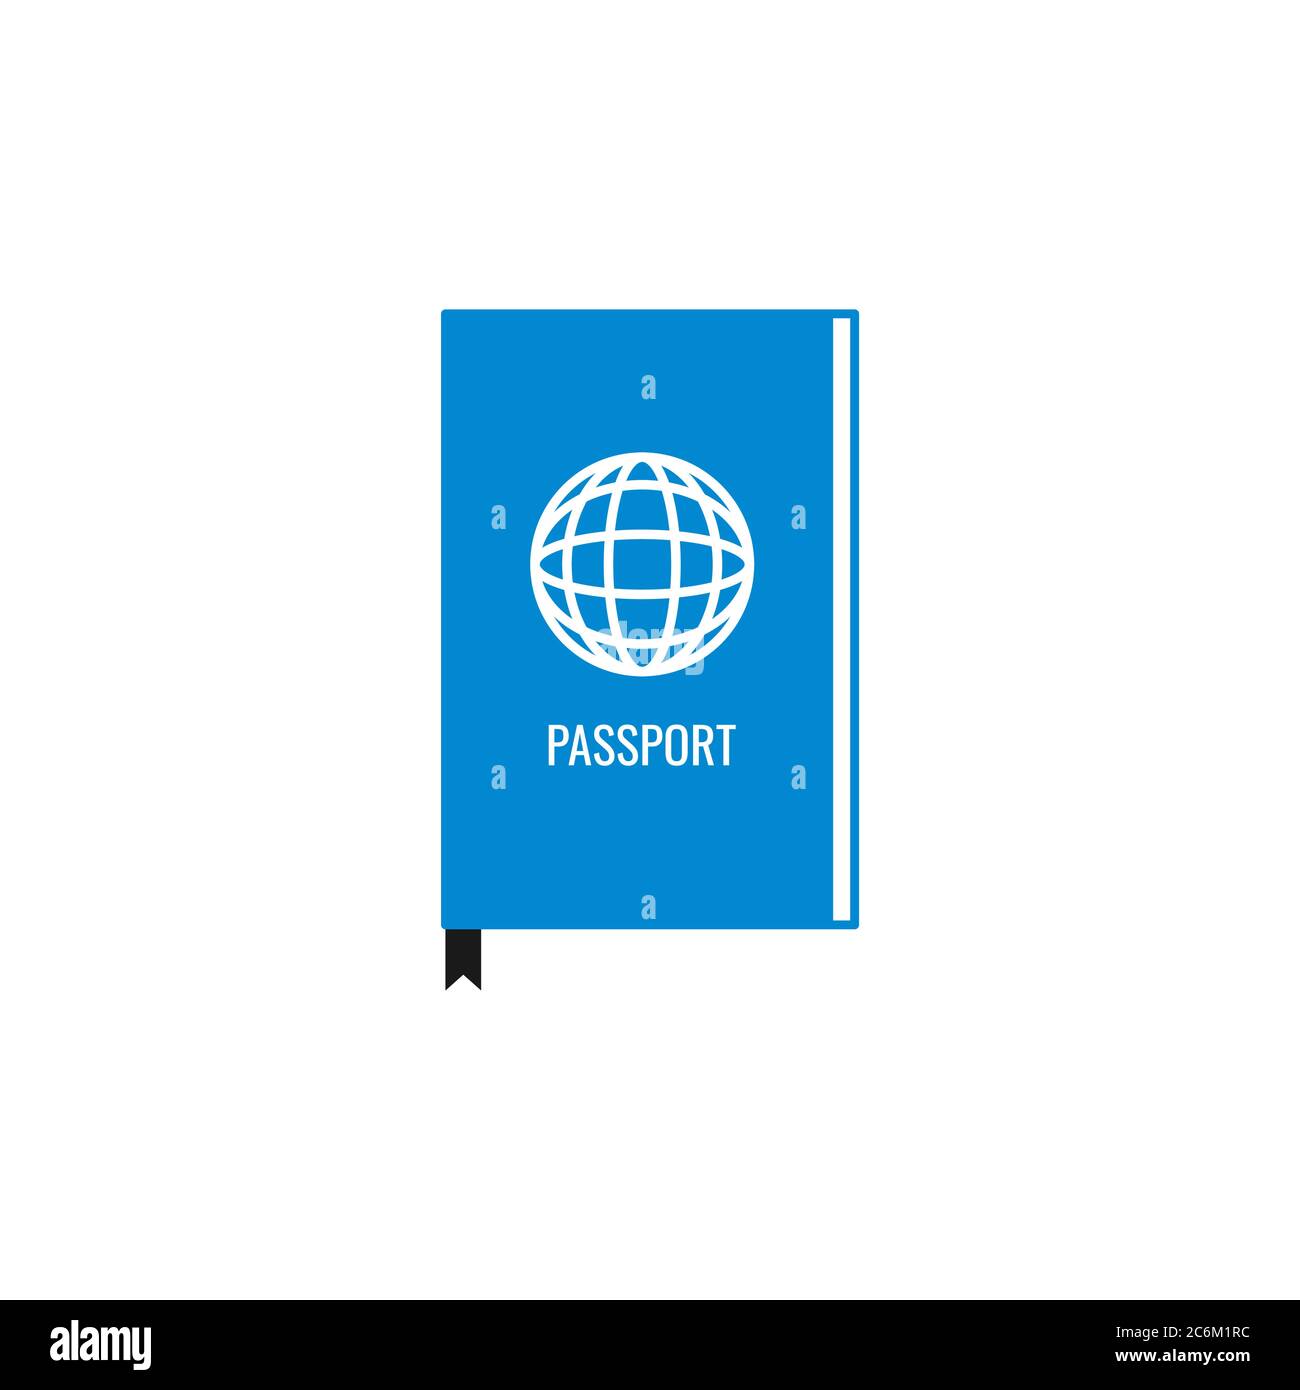 passport vector graphic design illustration Stock Vector